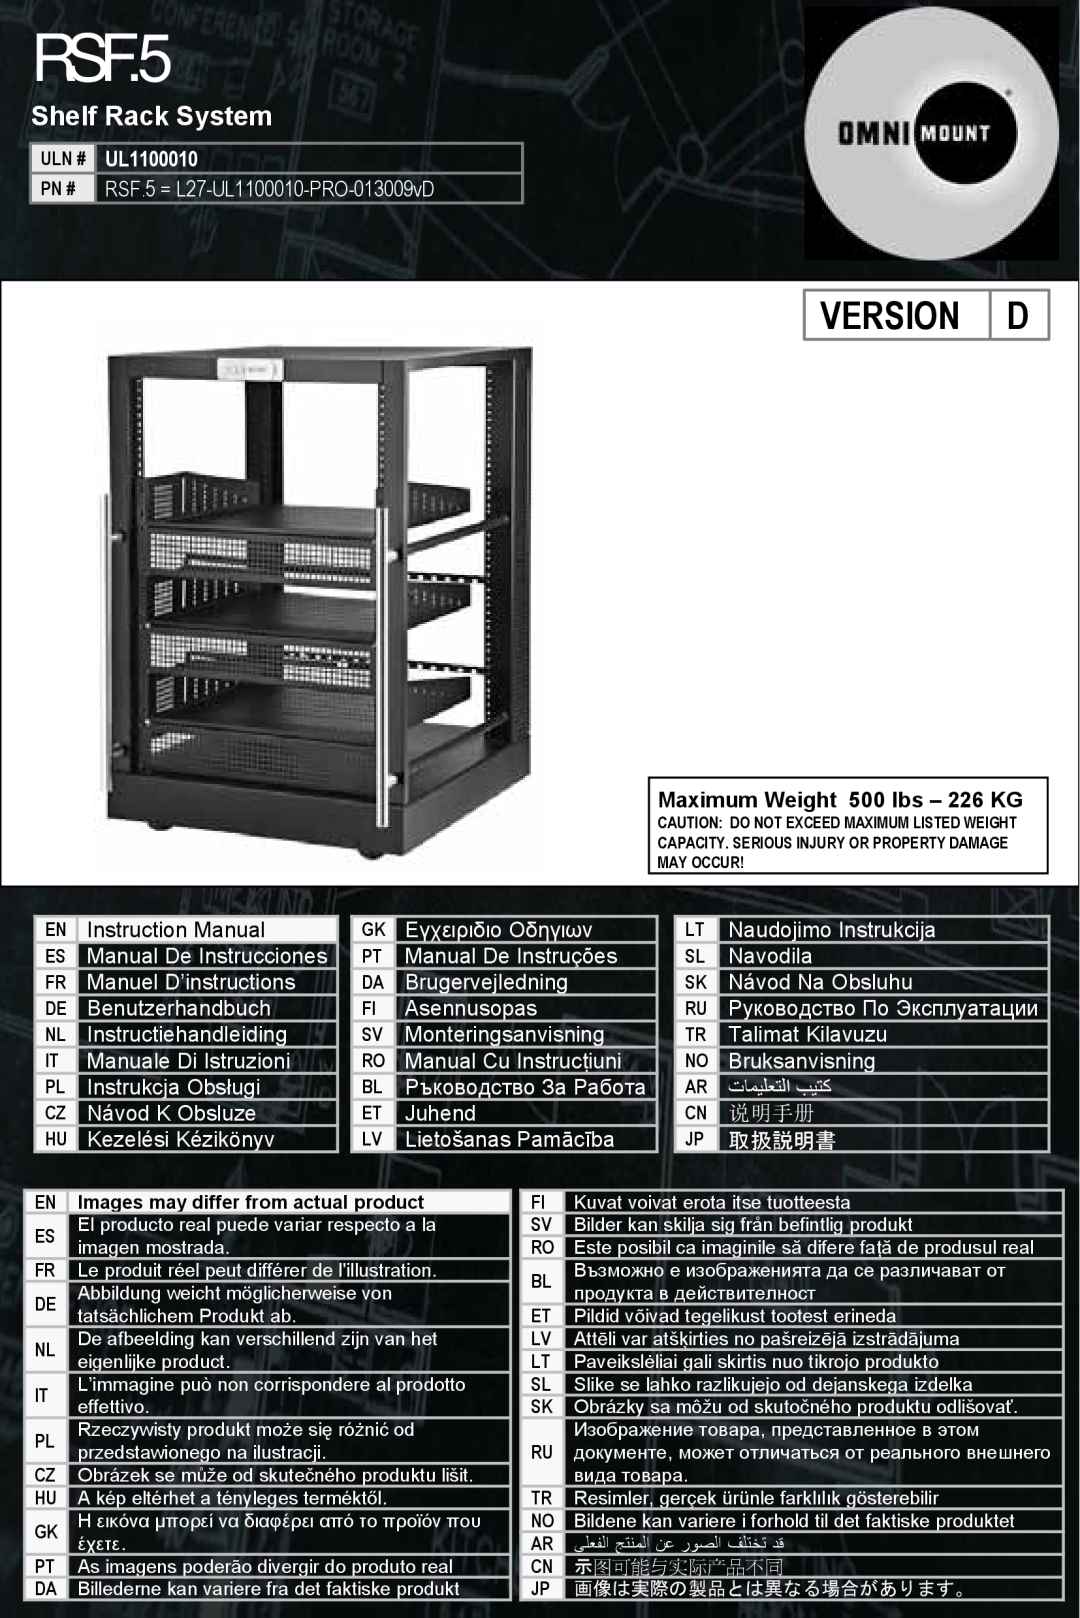 Omnimount instruction manual Shelf Rack System, PN # RSF.5 = L27-UL1100010-PRO-013009vD, Instruction Manual, 取扱説明書 